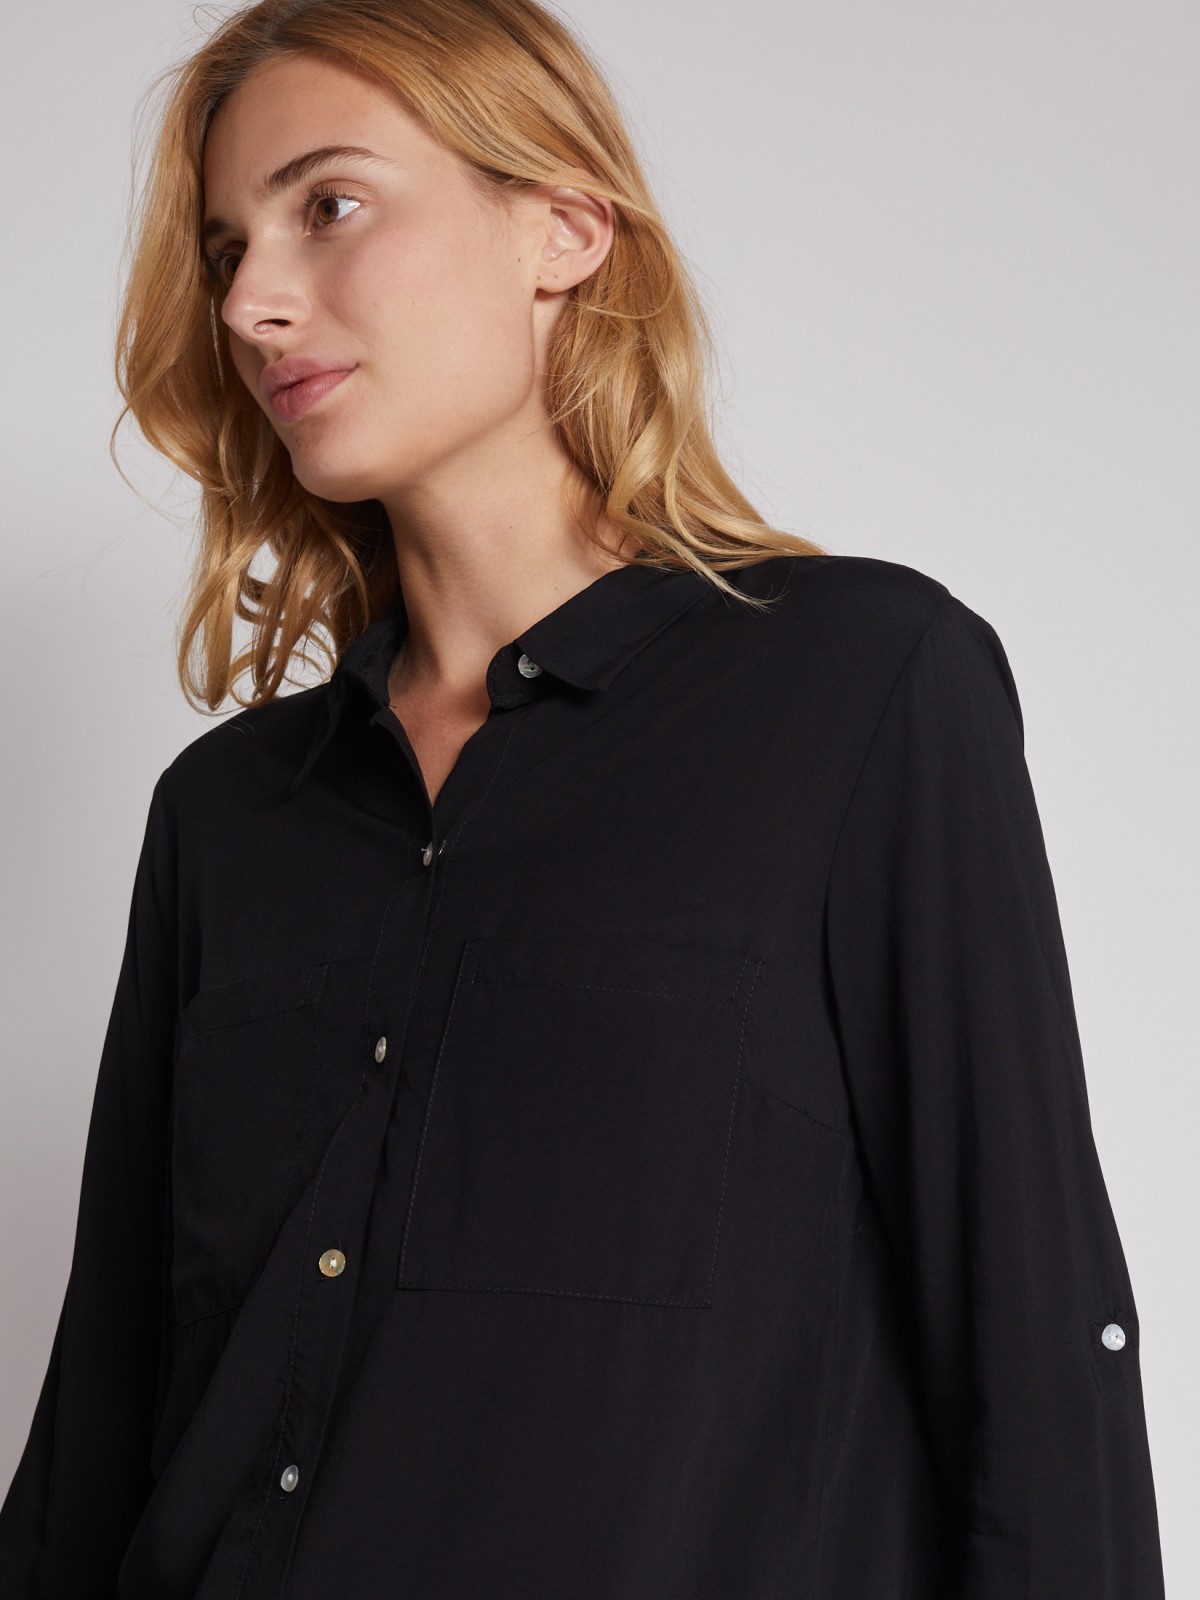 Рубашка с подхватами на рукавах zolla 022311162172, цвет черный, размер XS - фото 4